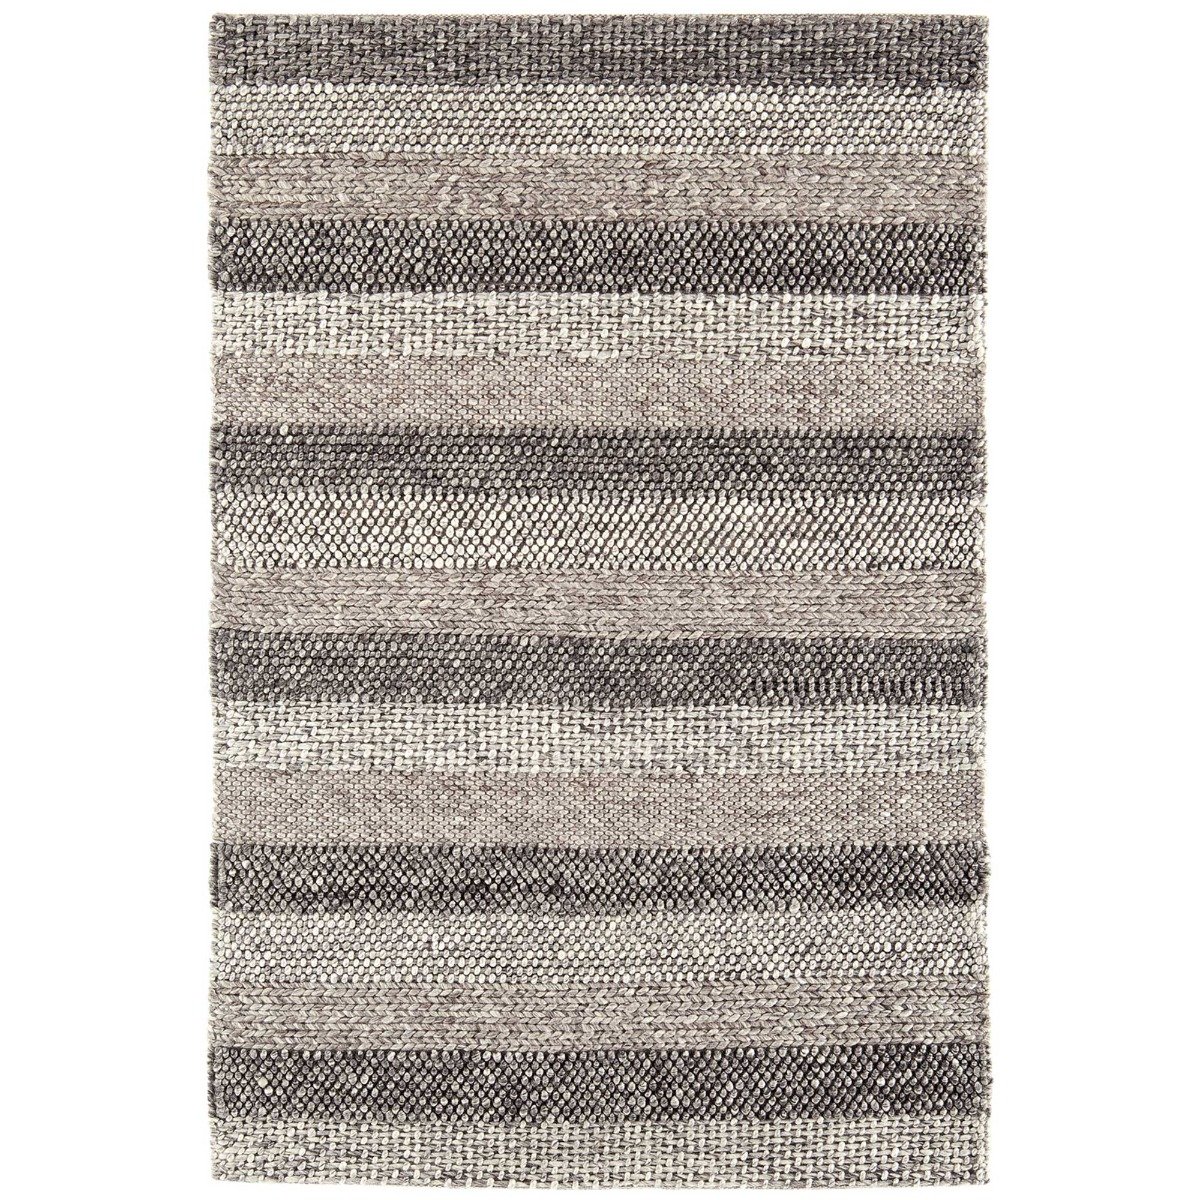 Flori Varied Stripe Stripe 160x230cm Rug, Square, Neutral | W160cm | Barker & Stonehouse